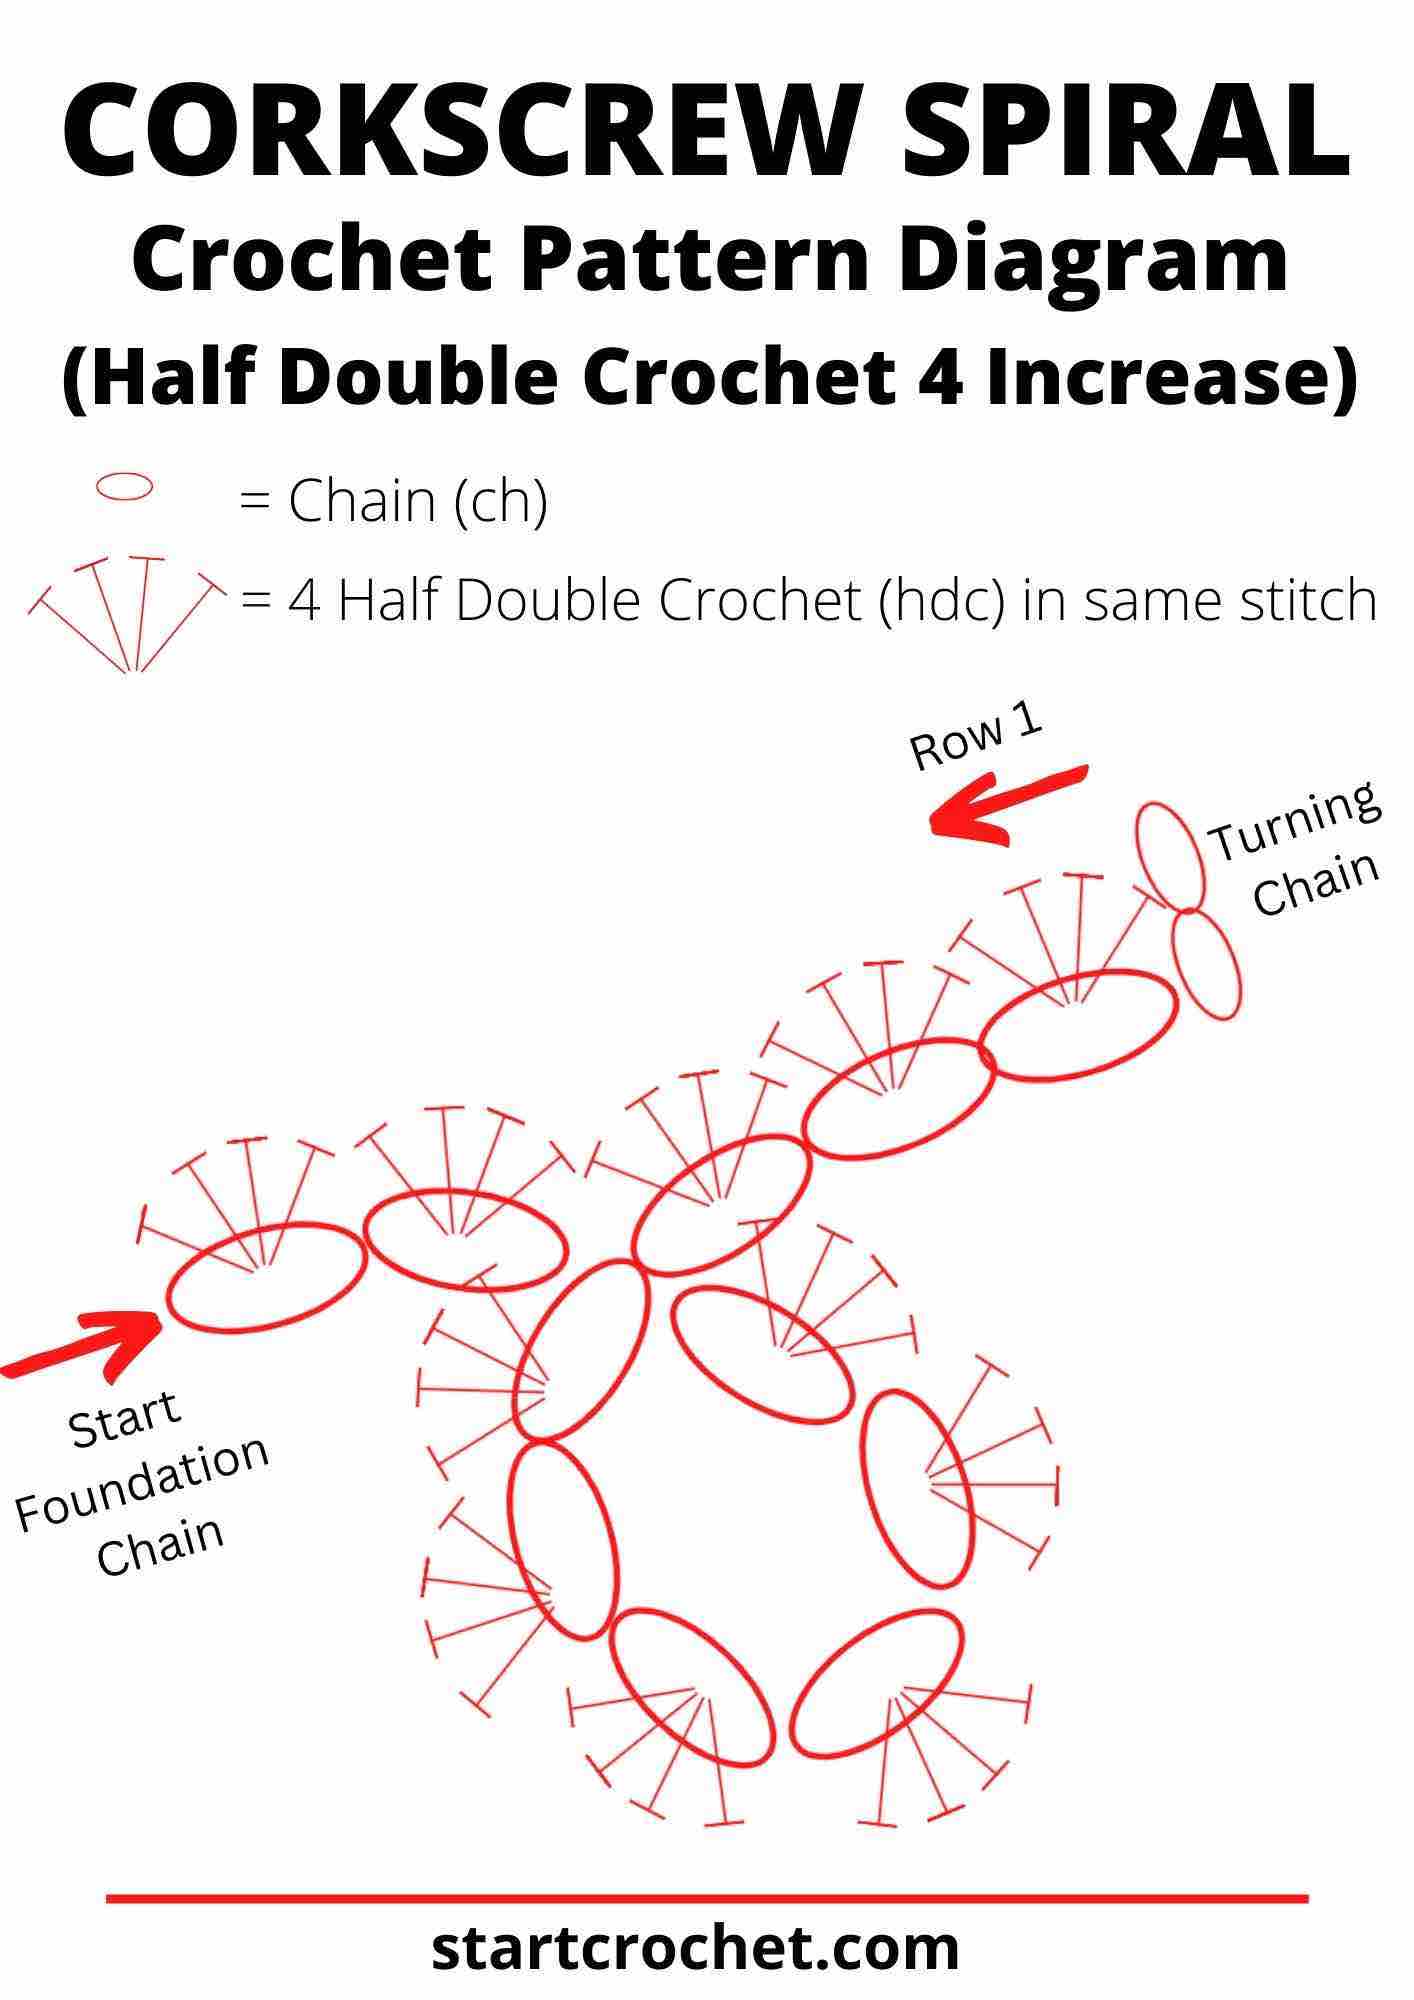 Corkscrew-Spiral-pattern-Diagram-hdc-4-increase